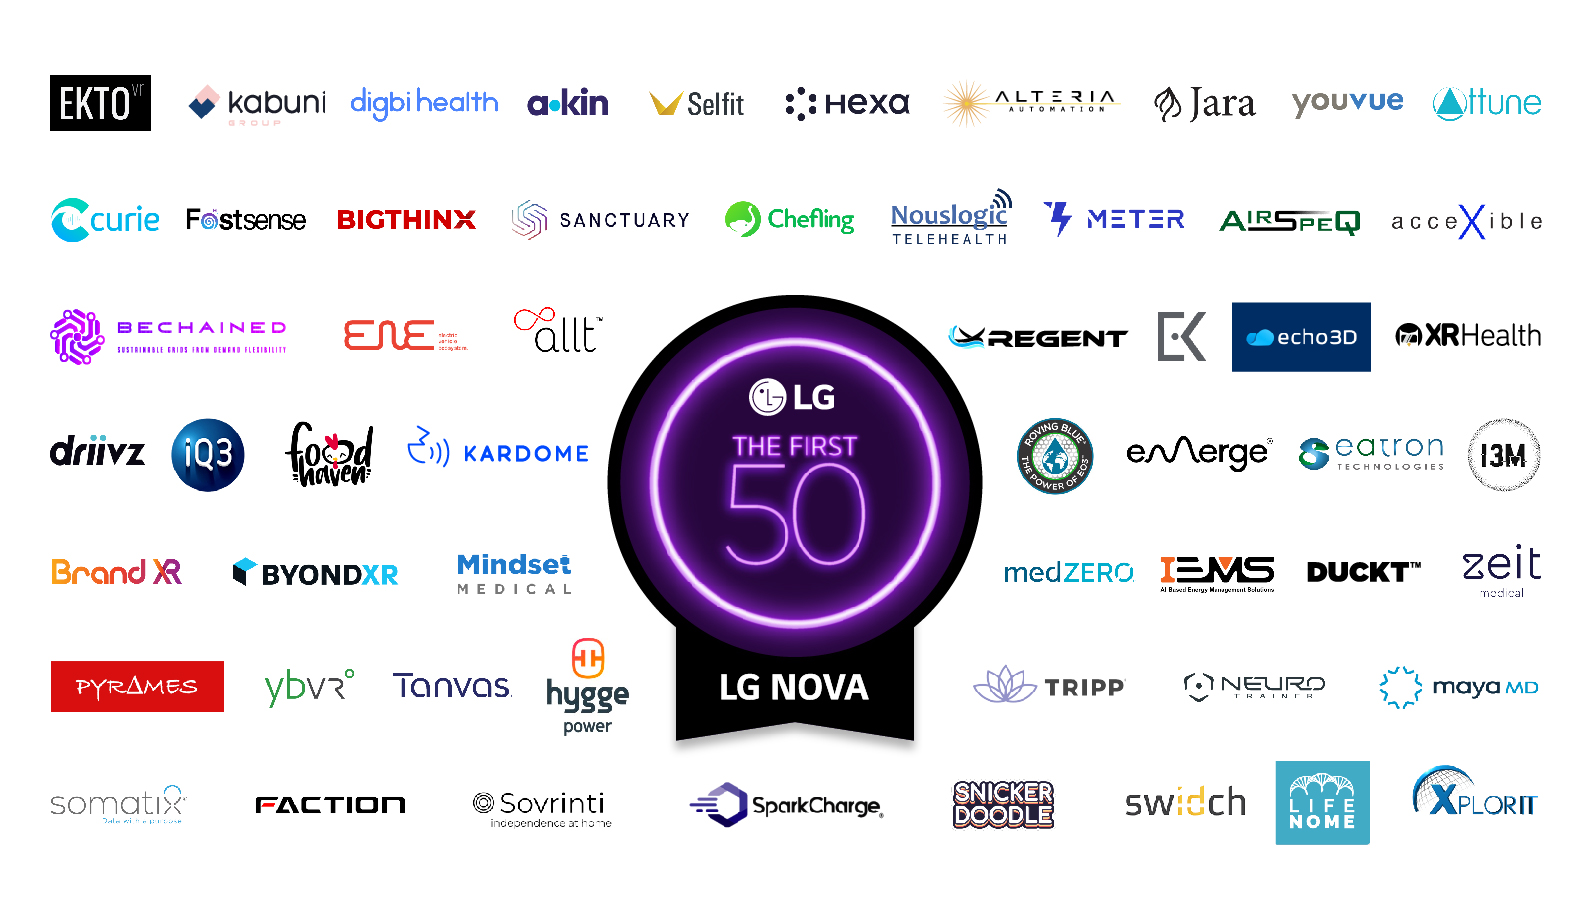 LG NOVA Program Announces “FIRST 50” Startups  Advancing to Next Phase of Incubation Program